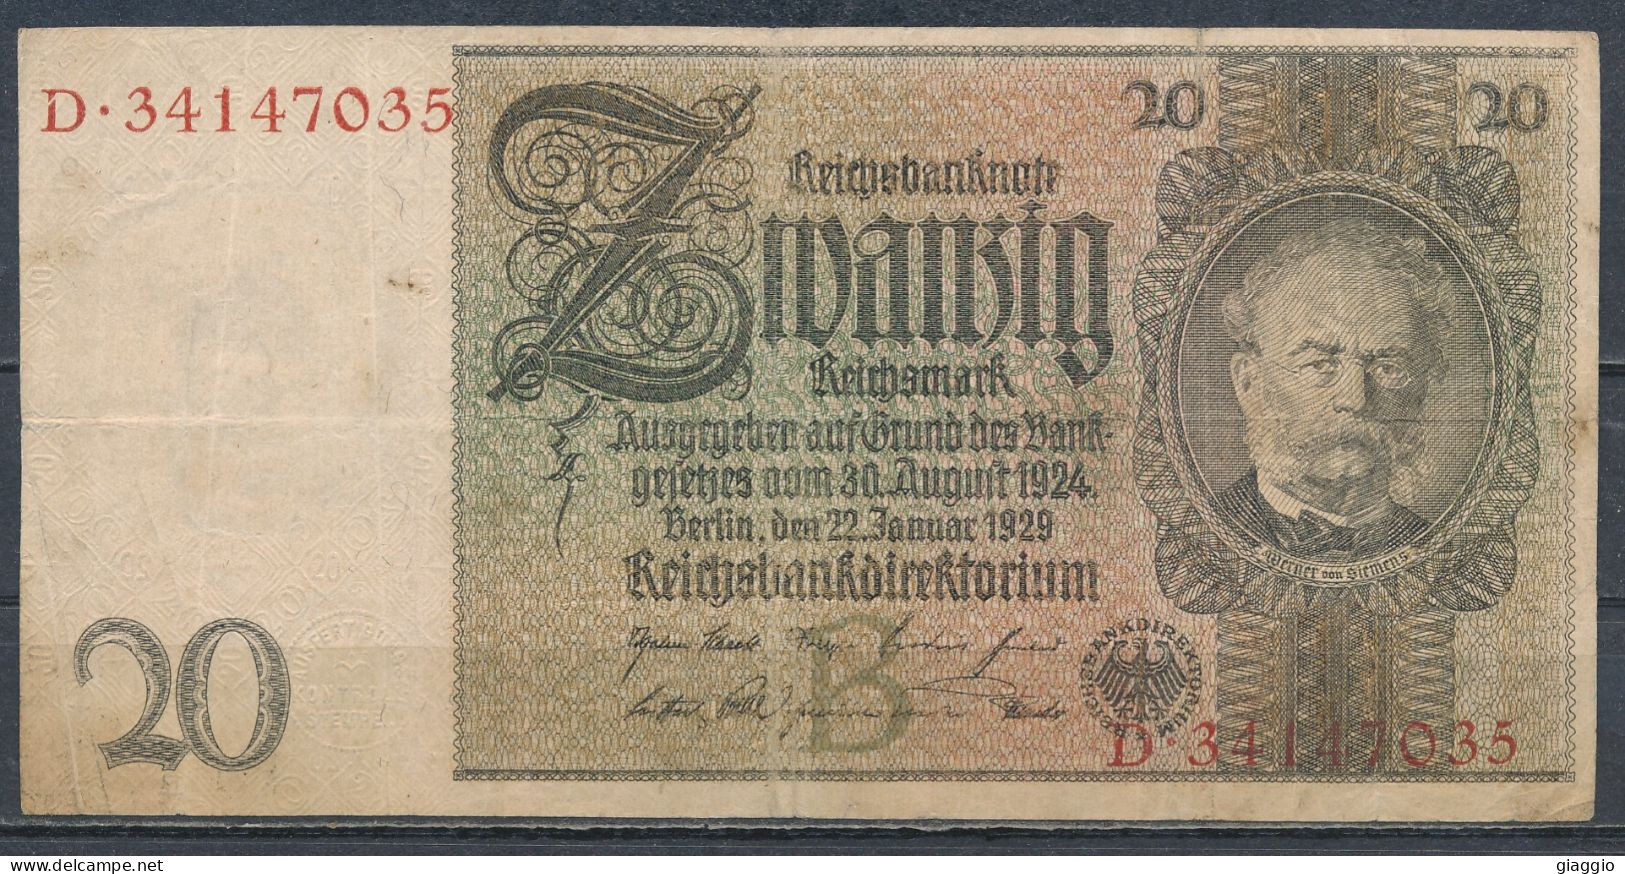 °°° GERMANY - 20 REICHSMARK 1929 SERIE D °°° - 20 Mark